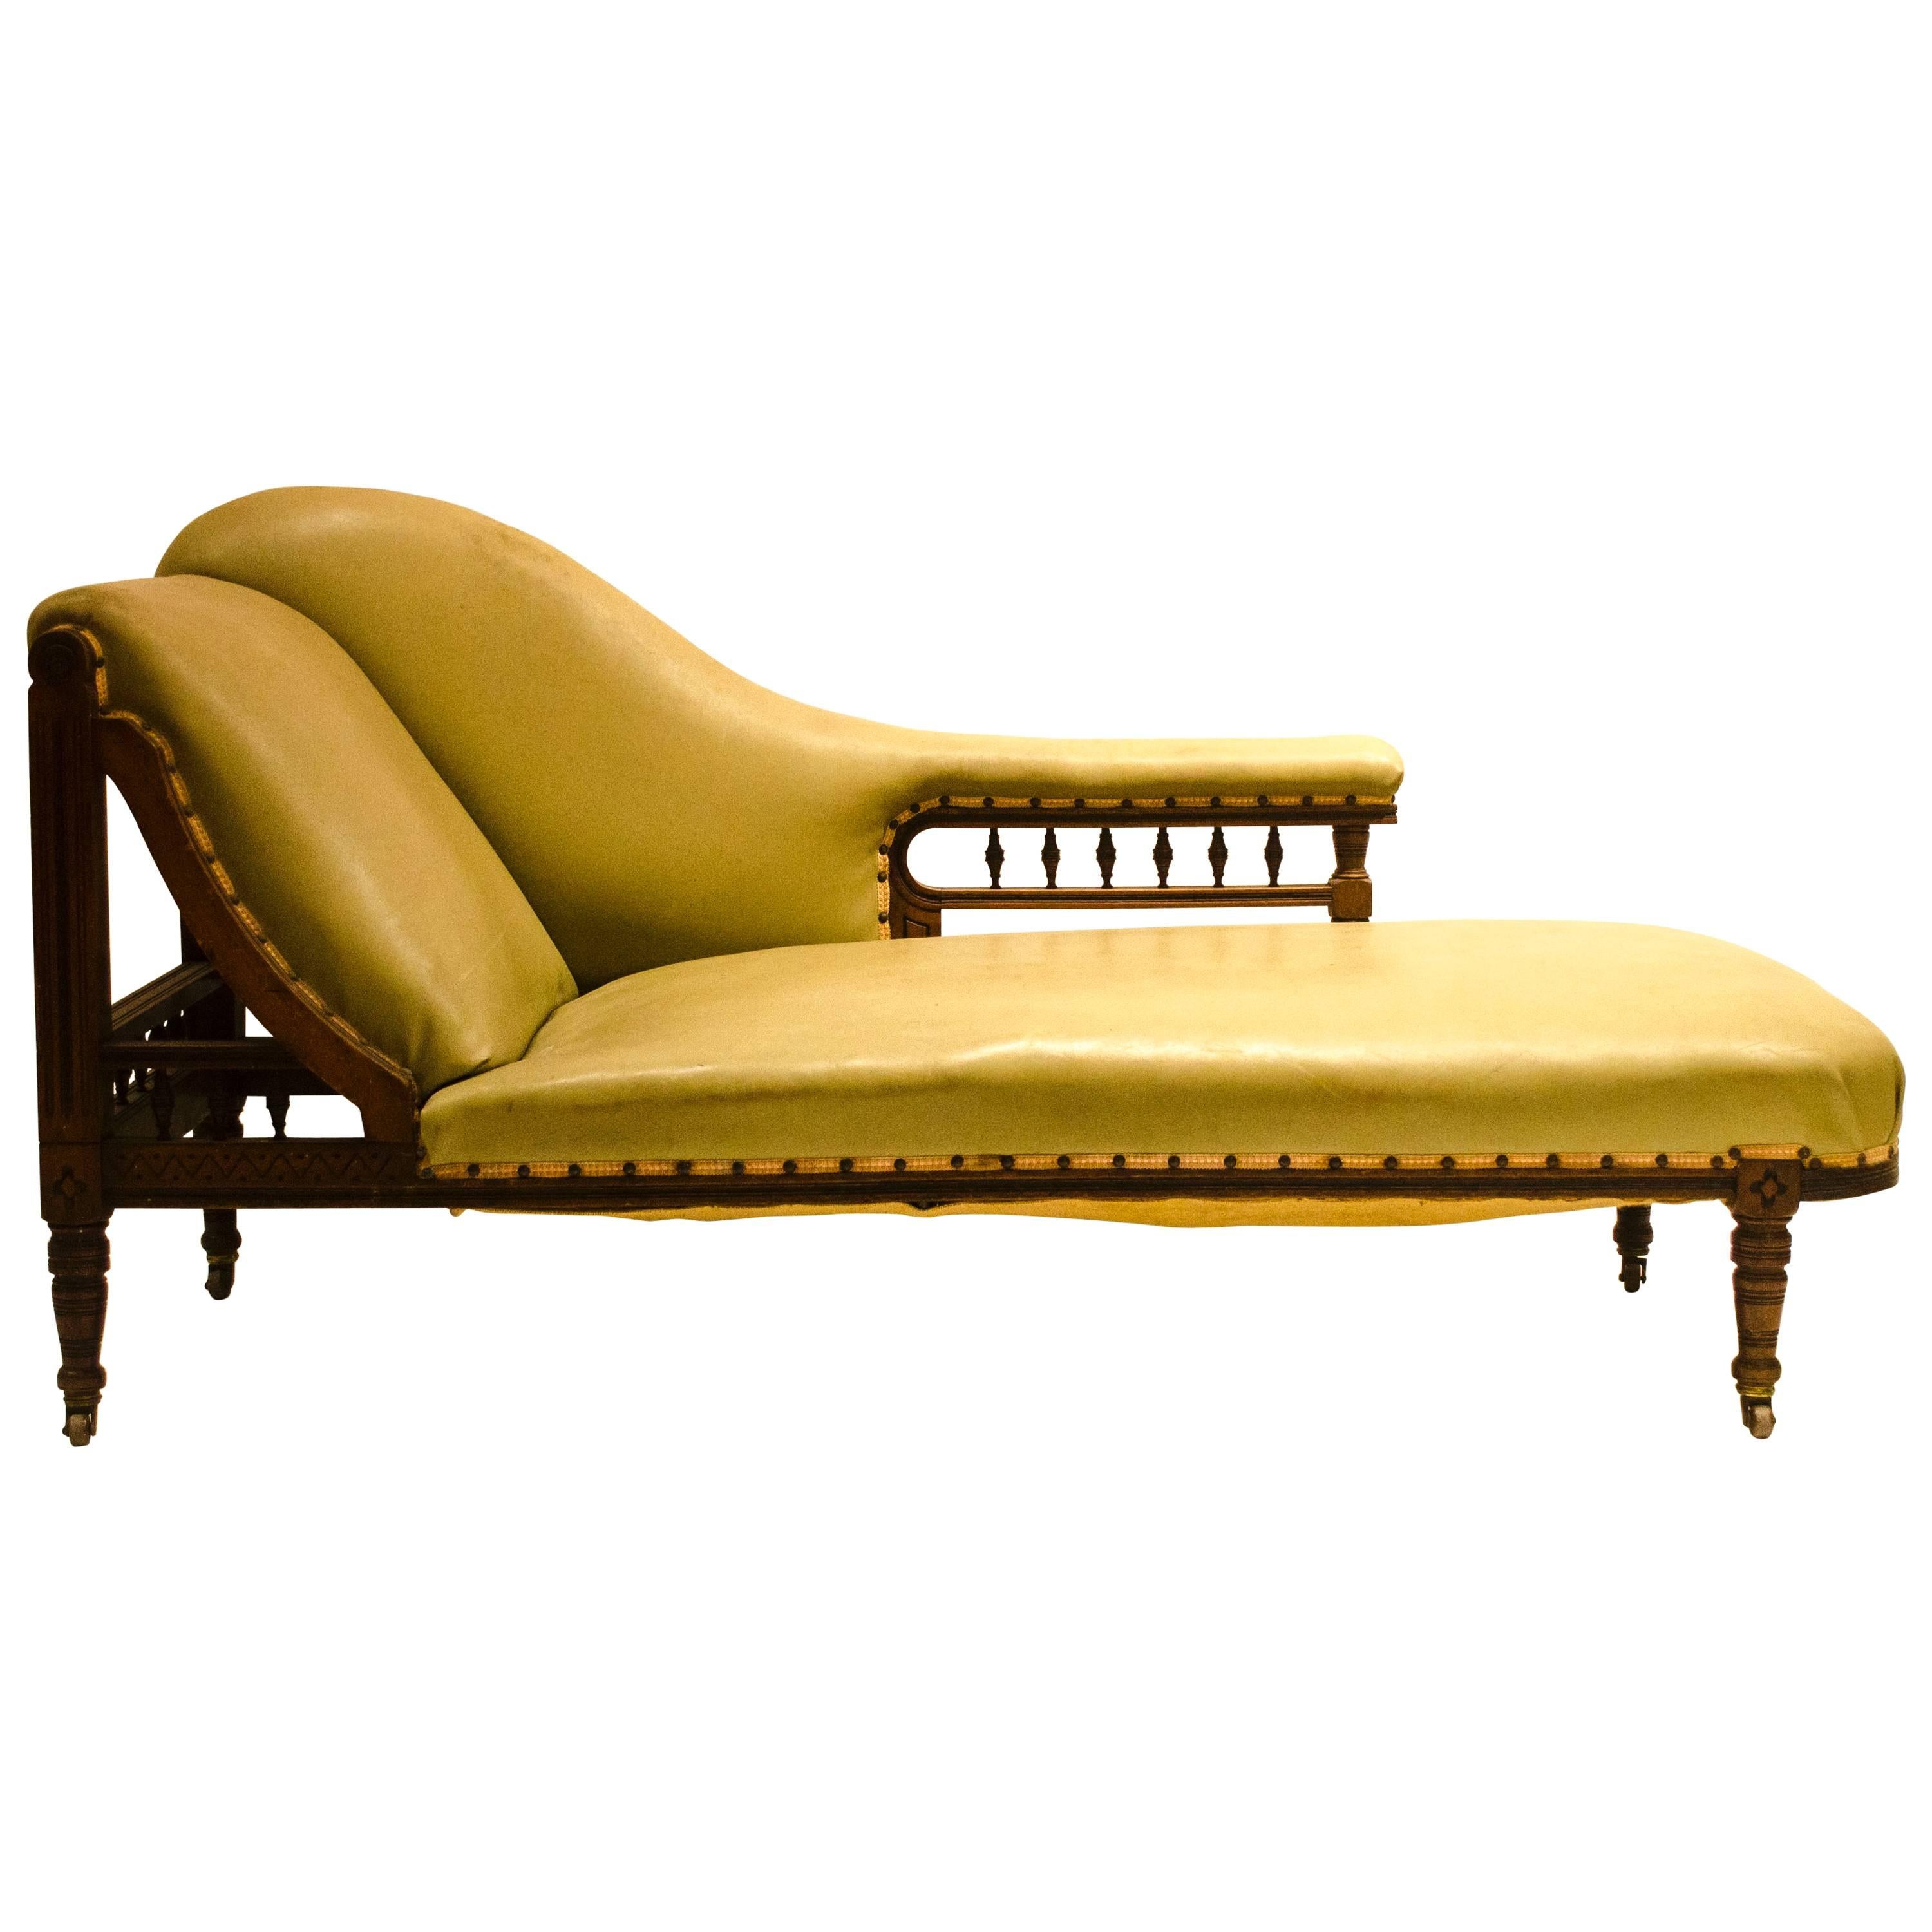 Thomas Collcutt attributed An Aesthetic Movement Walnut & Ebonized Chaise Lounge